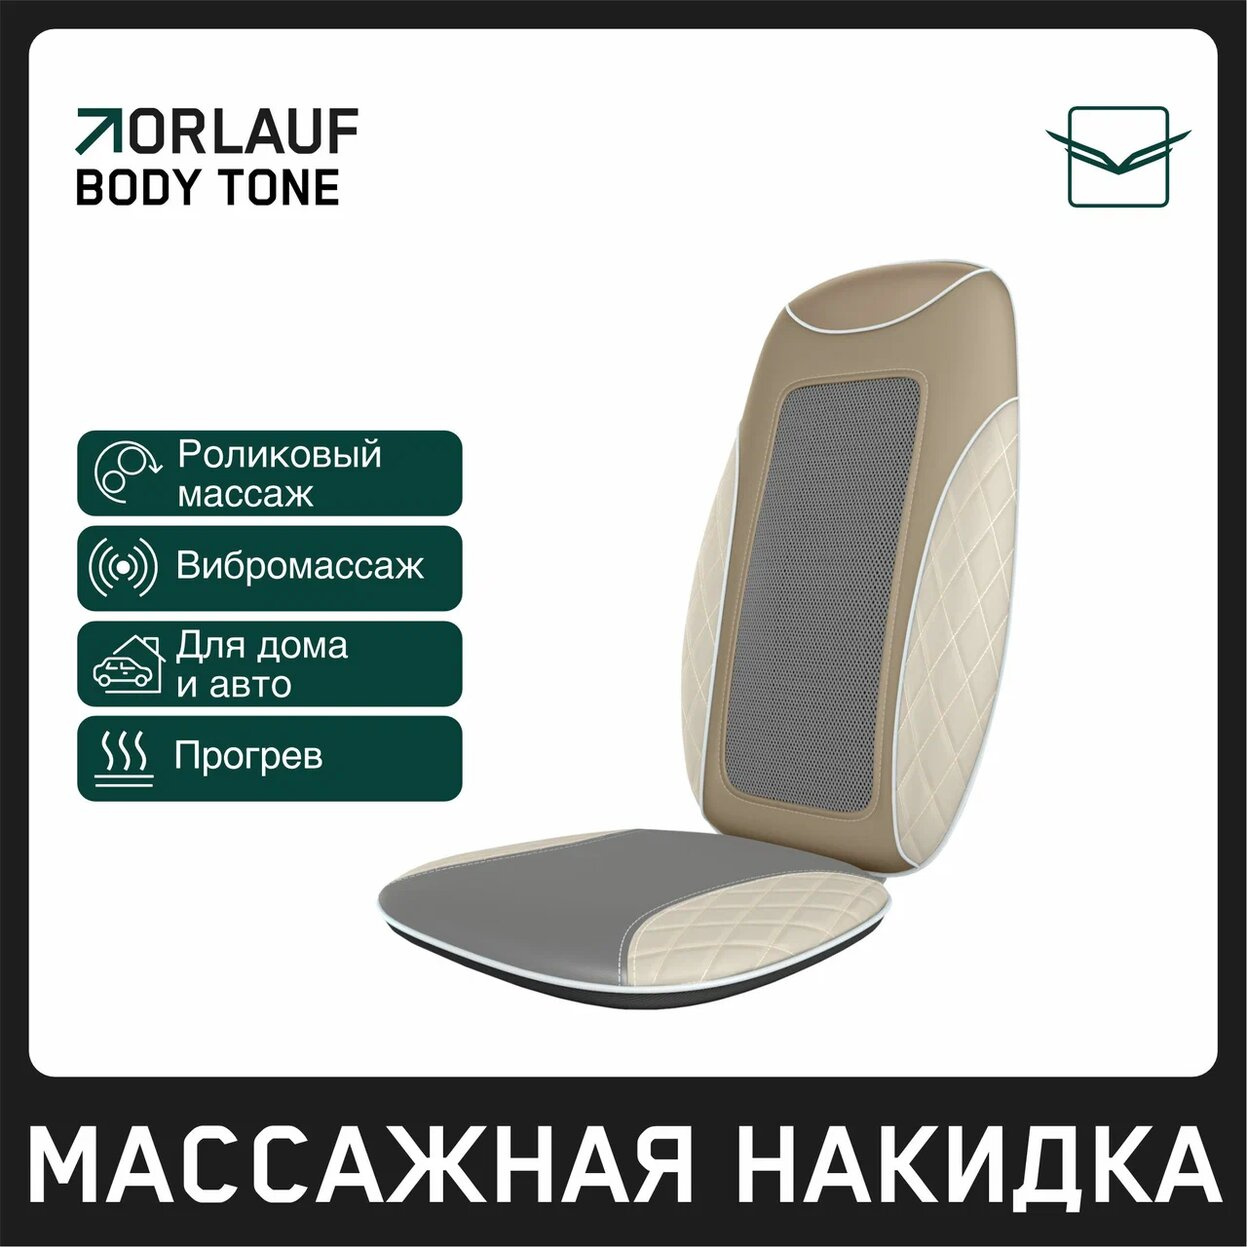 Body Tone в Ростове-на-Дону по цене 15400 ₽ в категории каталог Orlauf